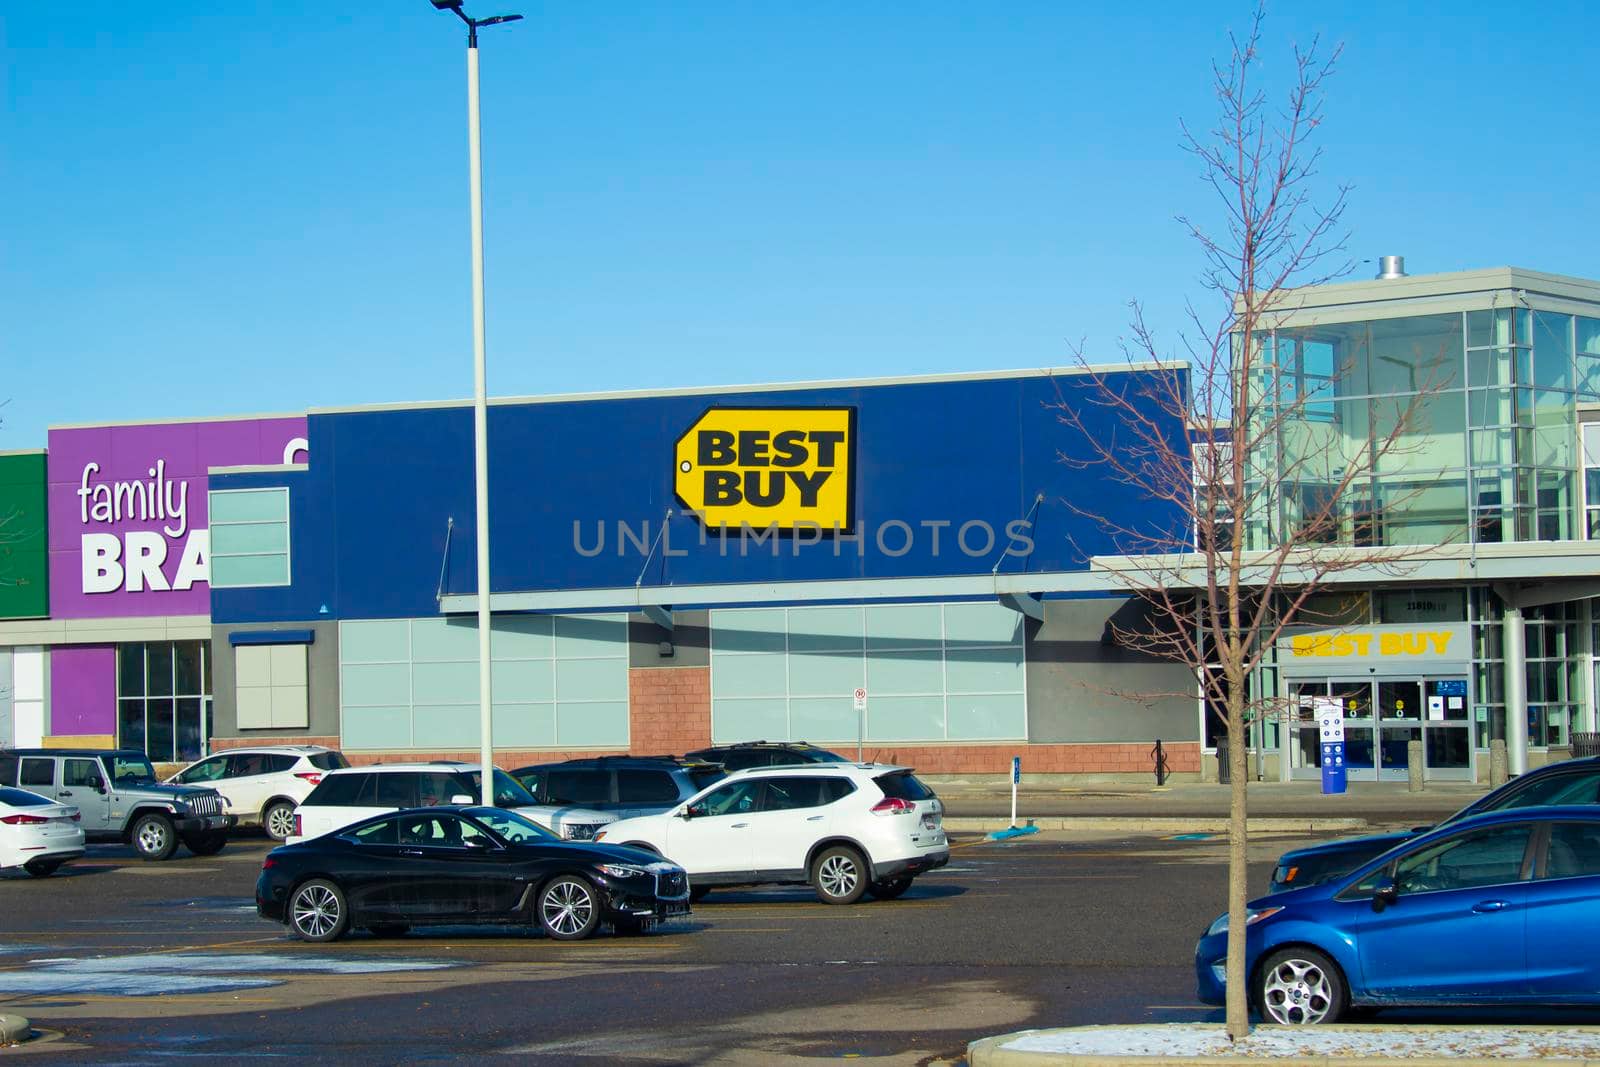 Calgary Alberta, Canada. Oct 17, 2020. Best Buy is an American multinational consumer electronics retailer headquartered in Richfield, Minnesota.